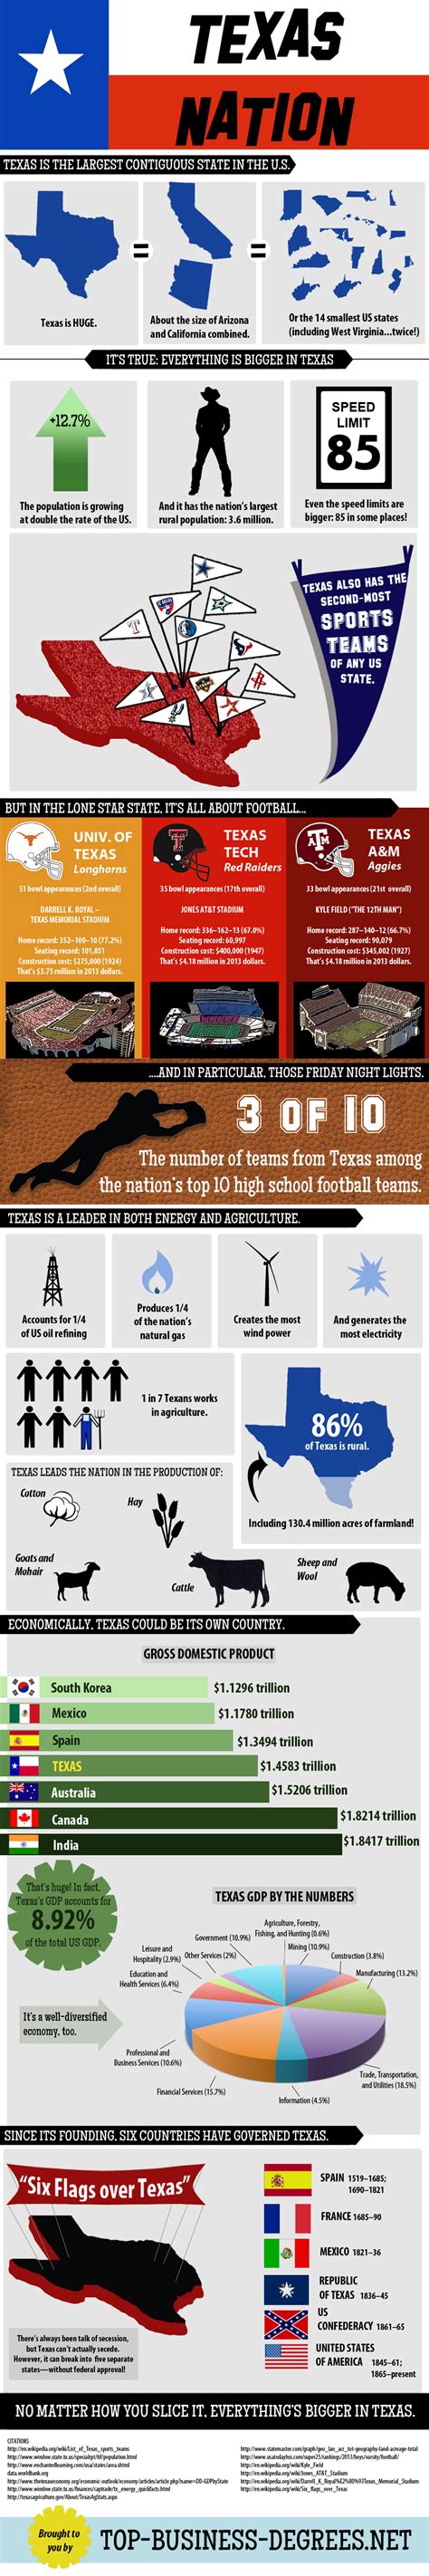 Texas Nation Infographic Texas Infographic Texas National